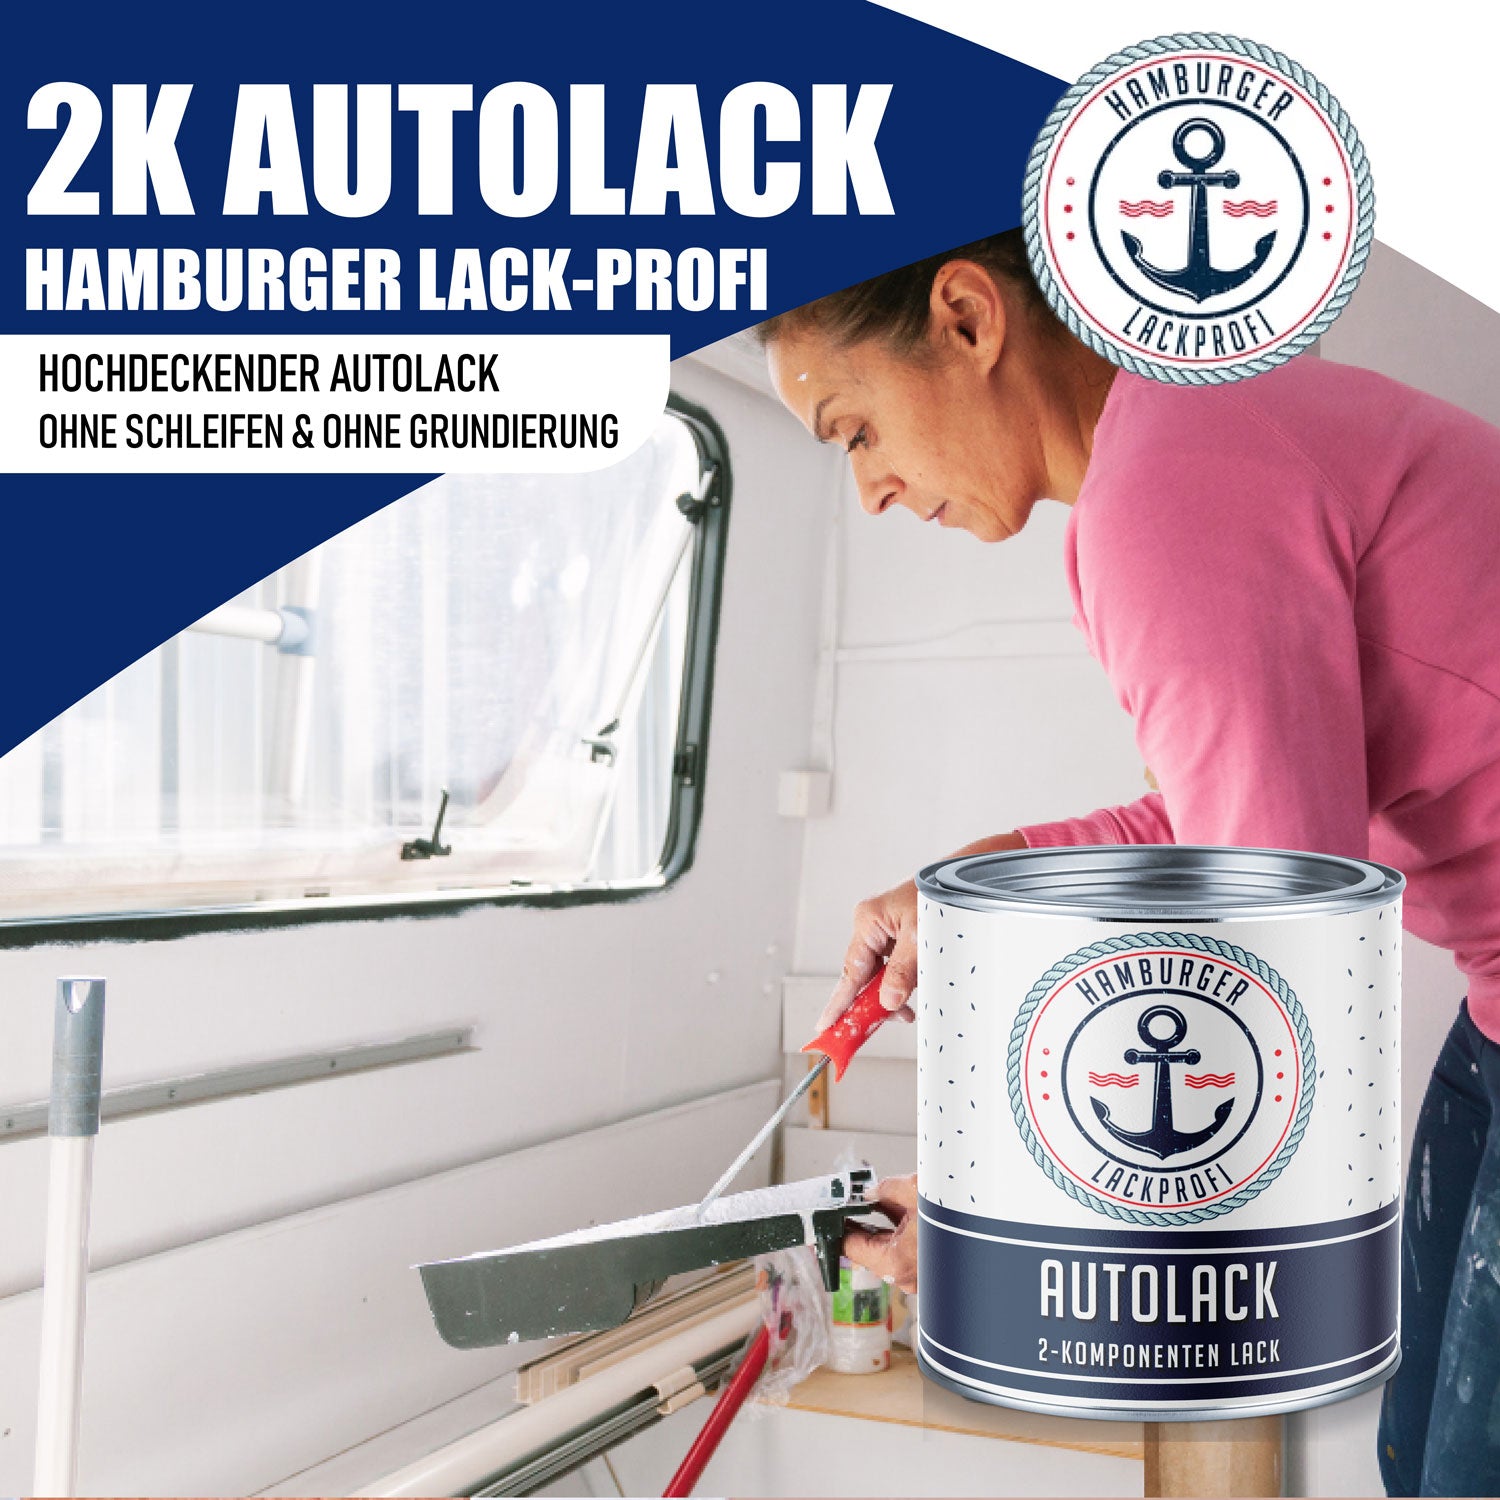 Hamburger Lack-Profi 2K Autolack in Oxidrot RAL 3009 mit Lackierset (X300) & Verdünnung (1 L) - 30% Sparangebot